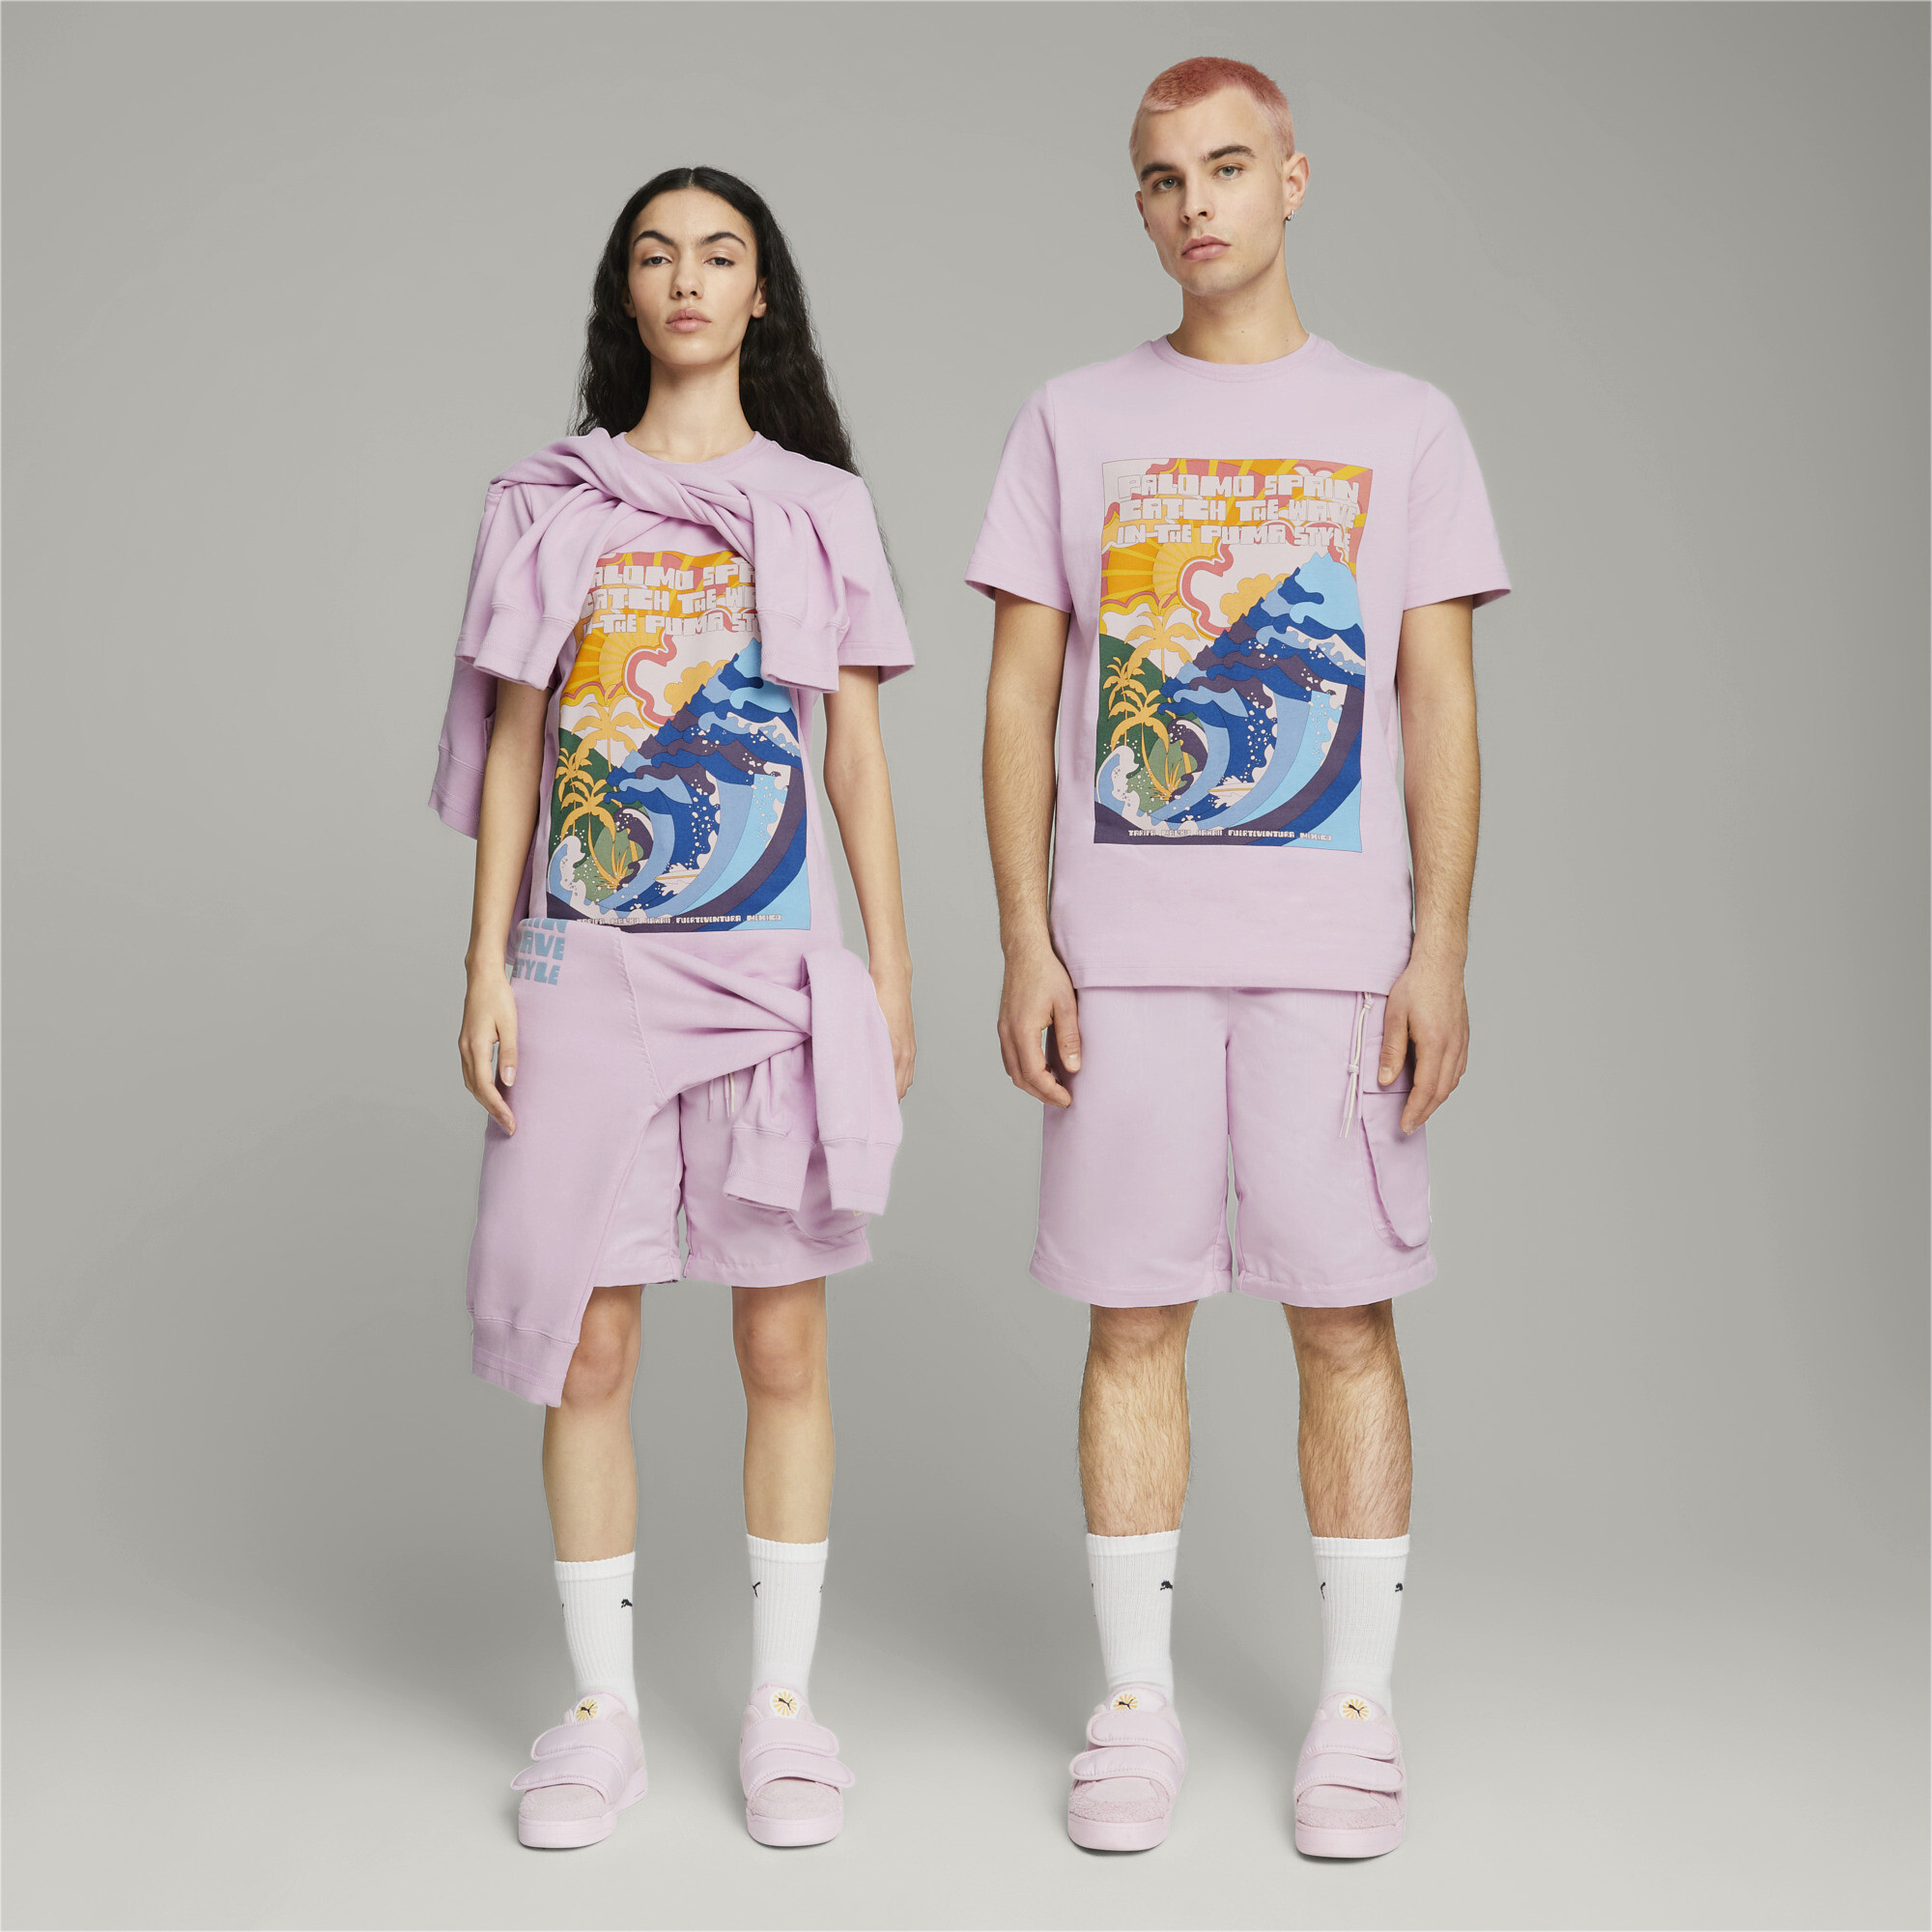 Men's PUMA X PALOMO Graphic T-Shirt In 70 - Pink, Size XS